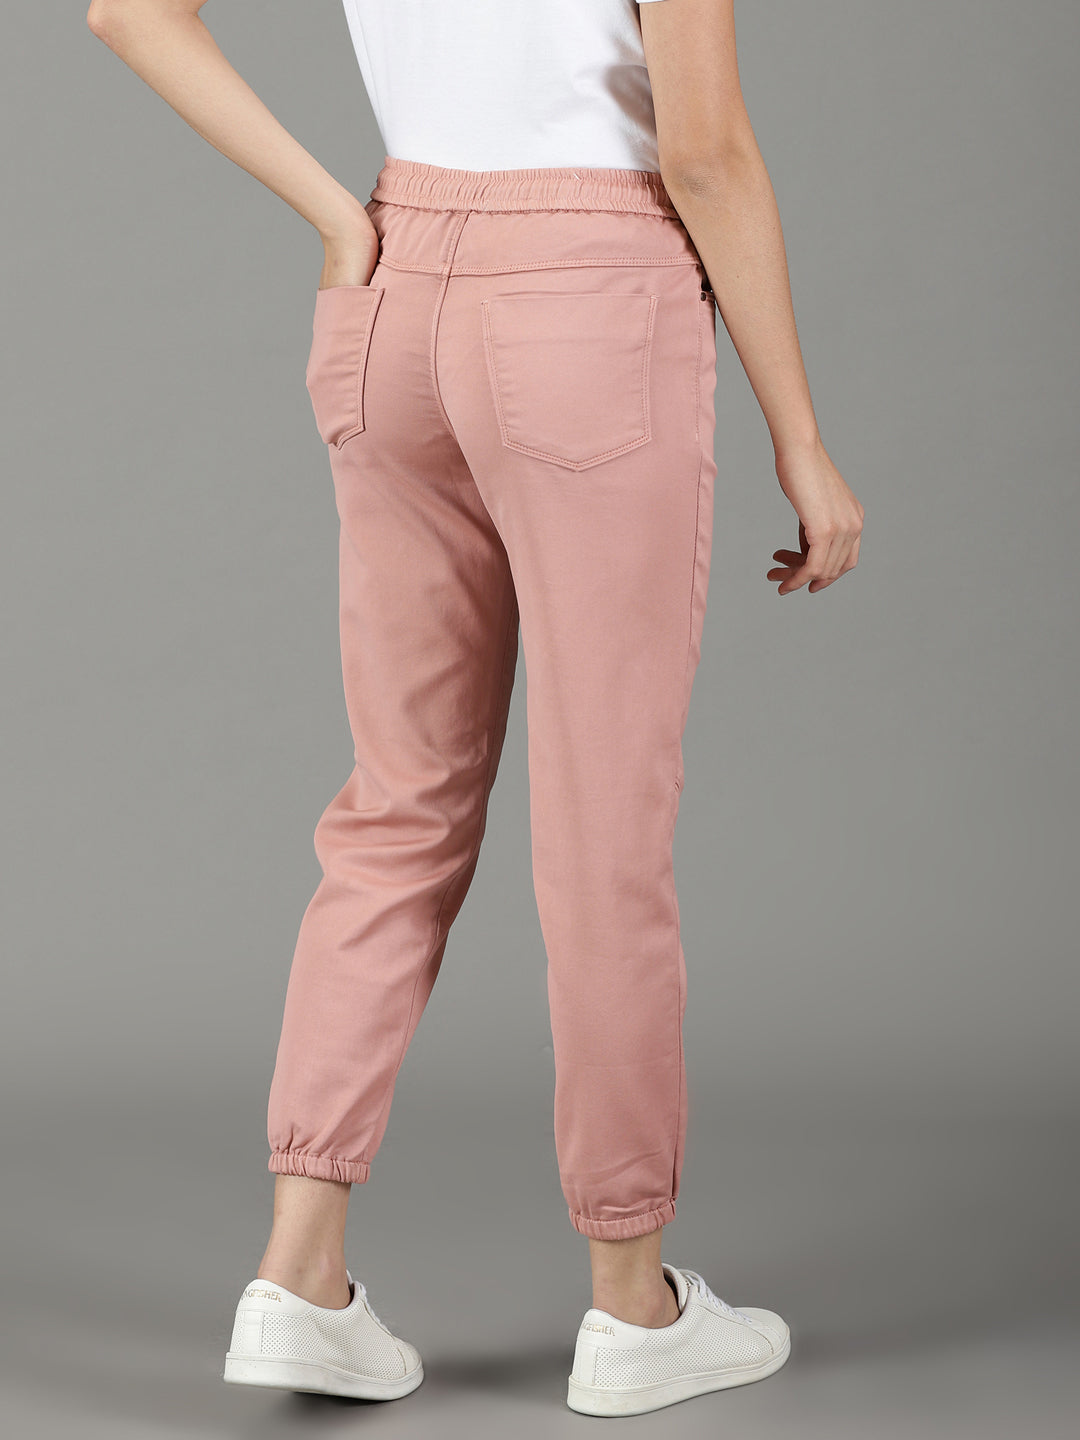 Women's Pink Solid Jogger Denim Jeans